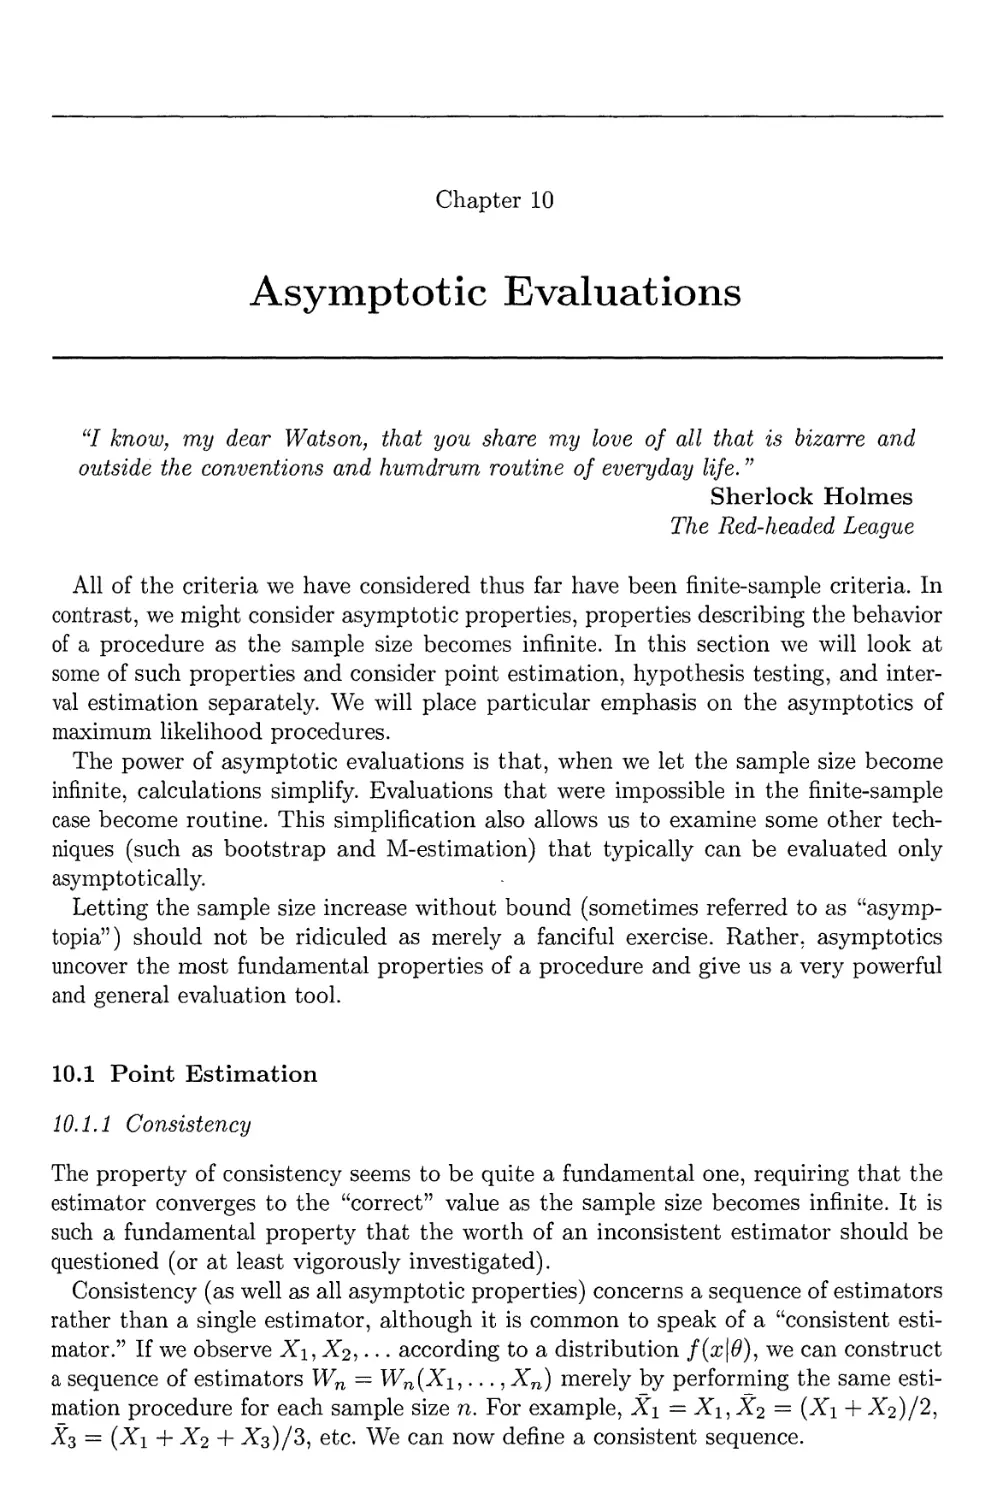 10. Asymptotic Evaluations